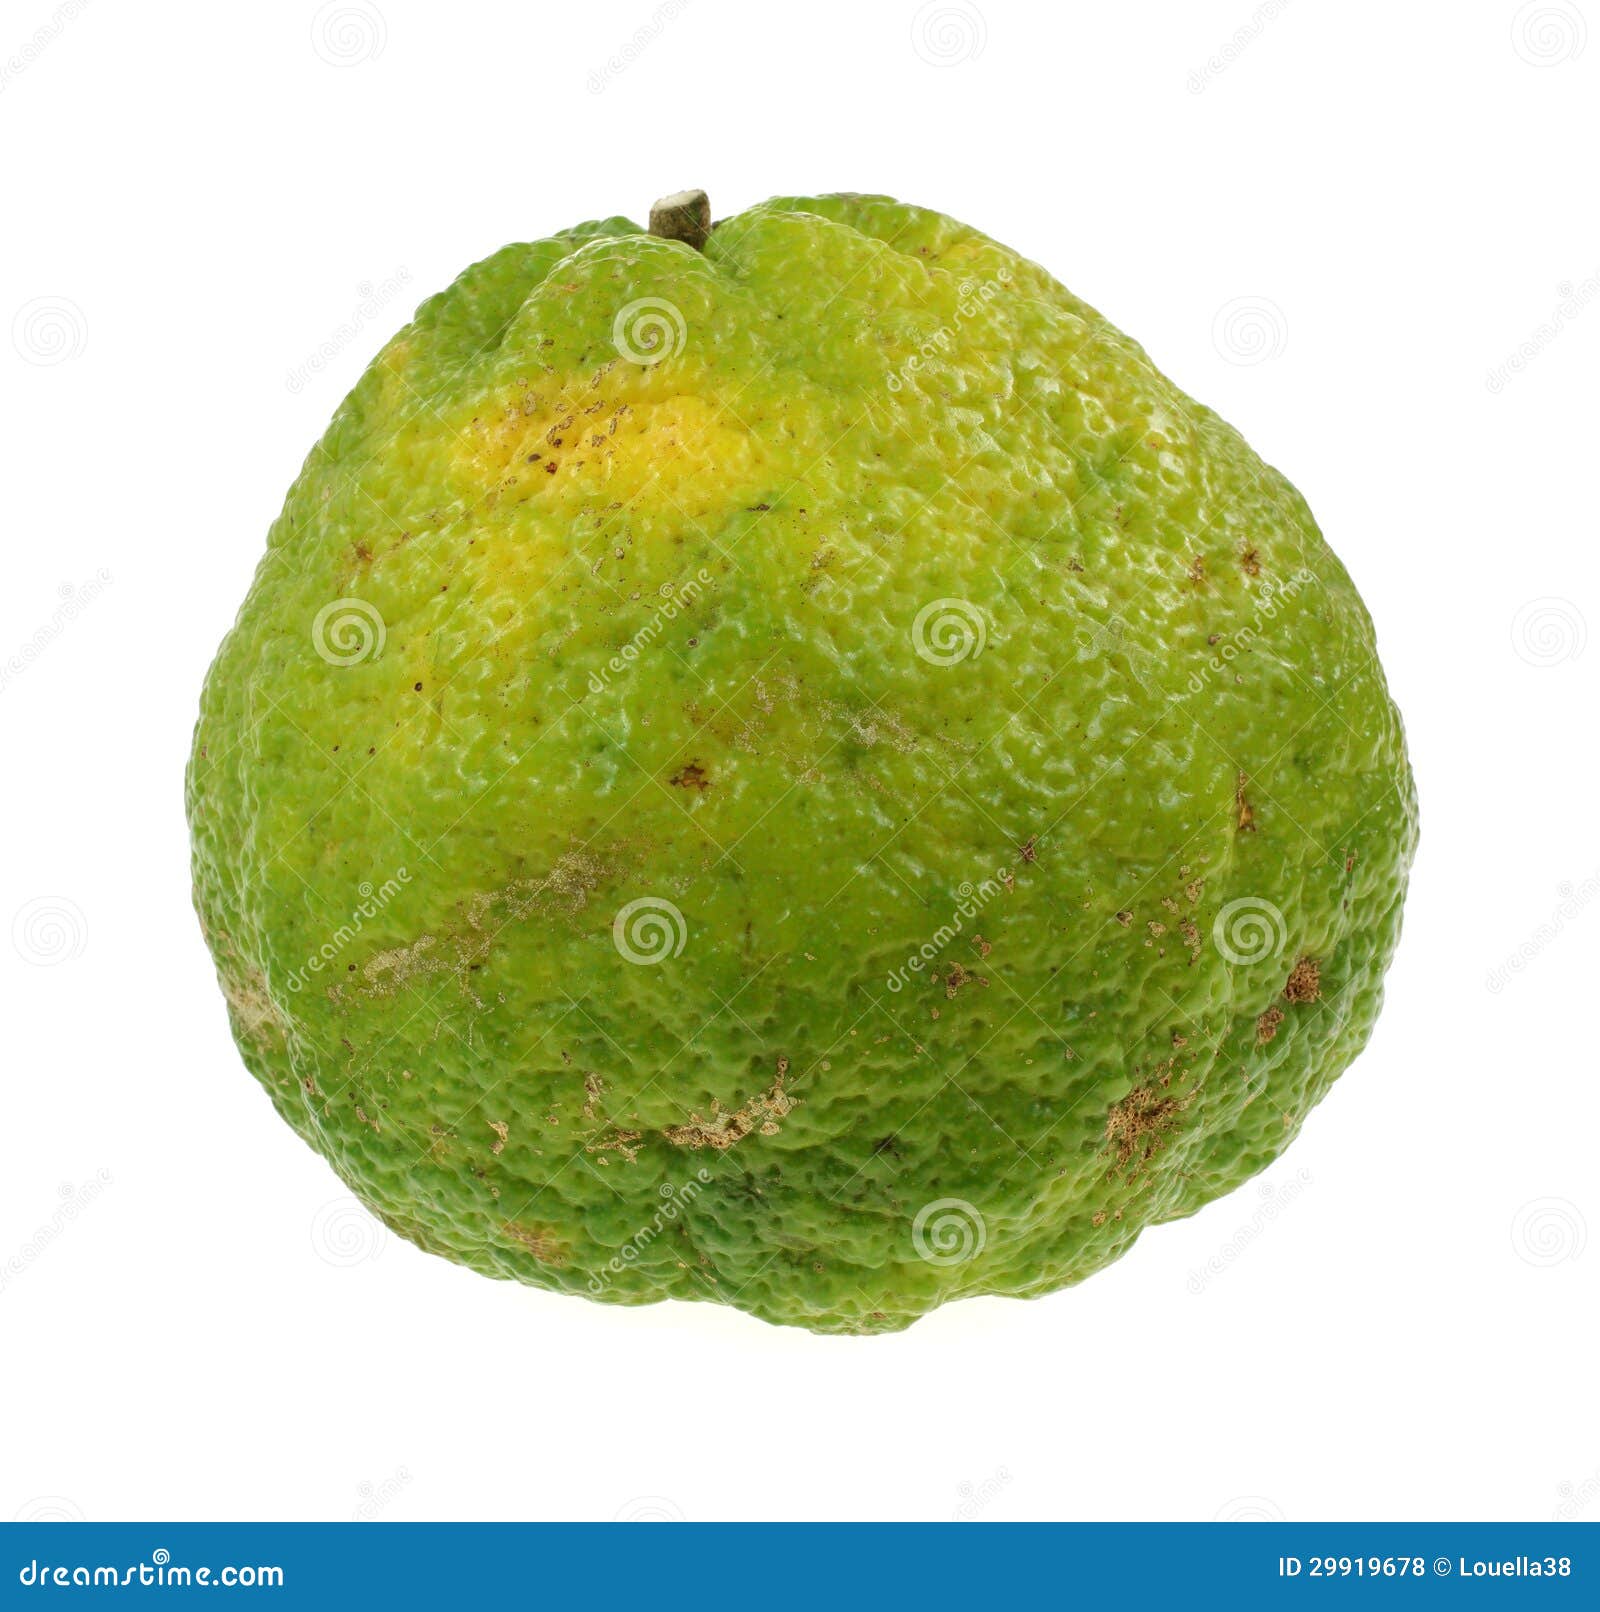 Top 93+ Images citrus also known as “uniq fruit” Full HD, 2k, 4k